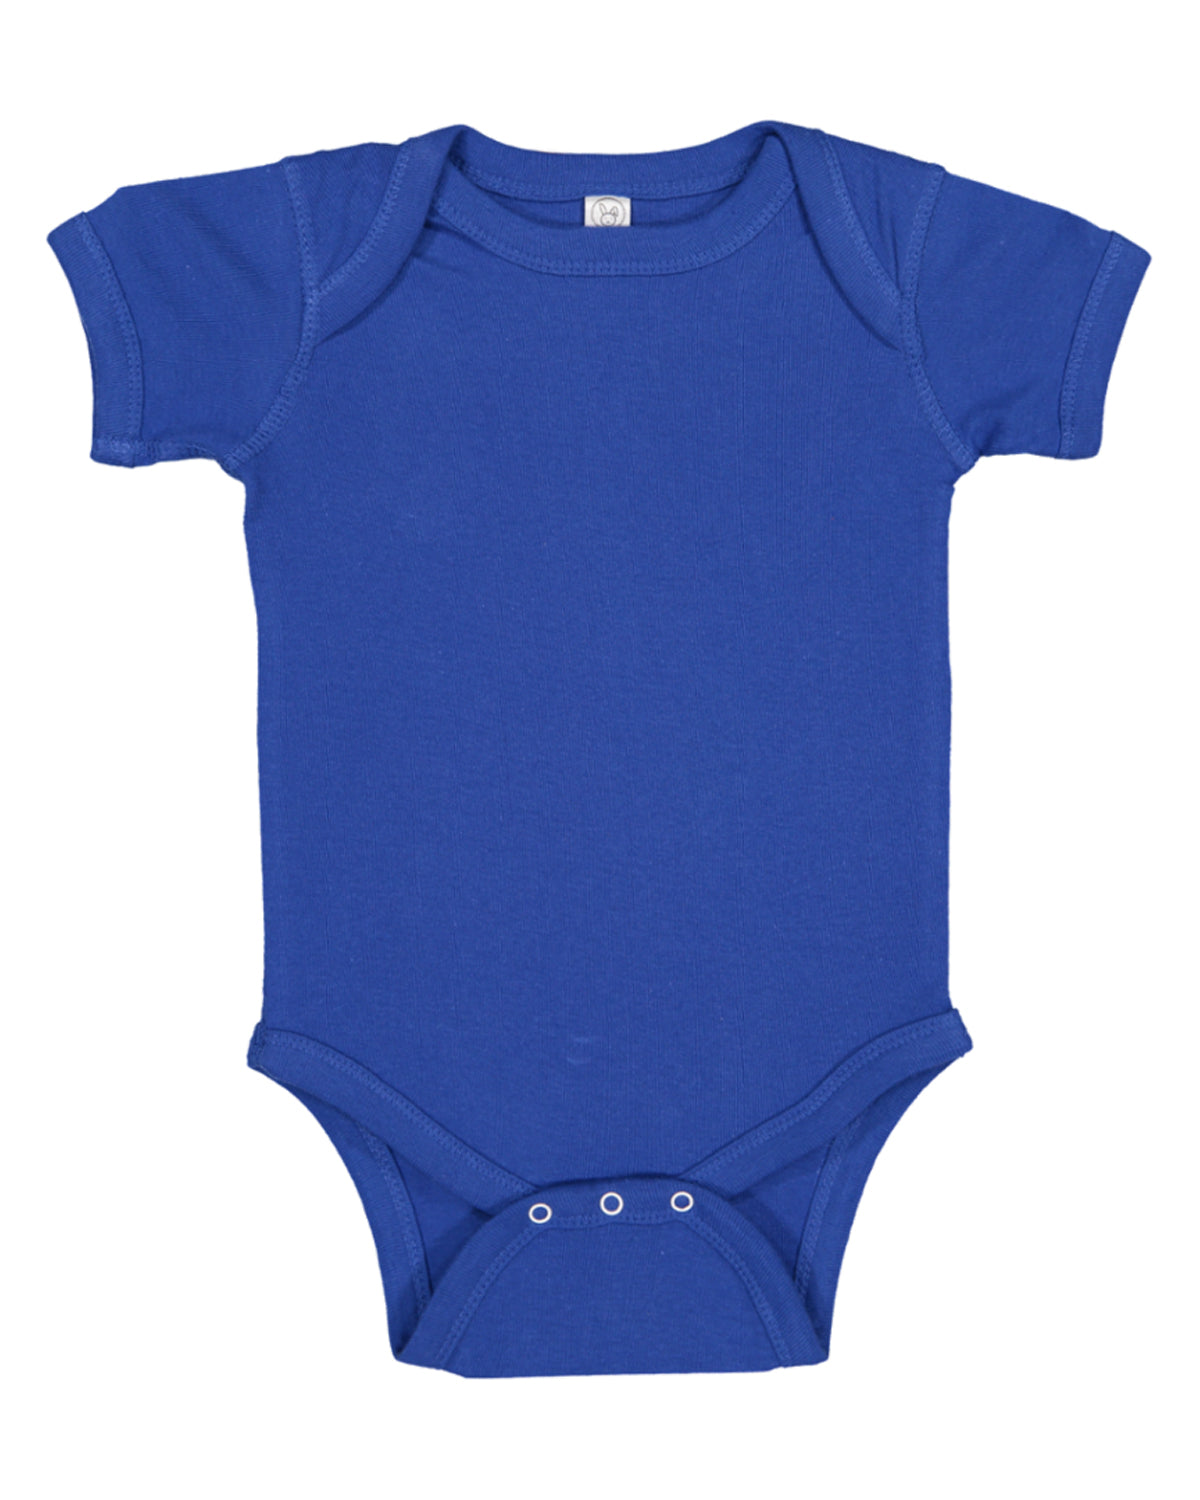 Short Sleeve -- Baby Bodysuit / Onesie -- 100% Cotton -- Royal